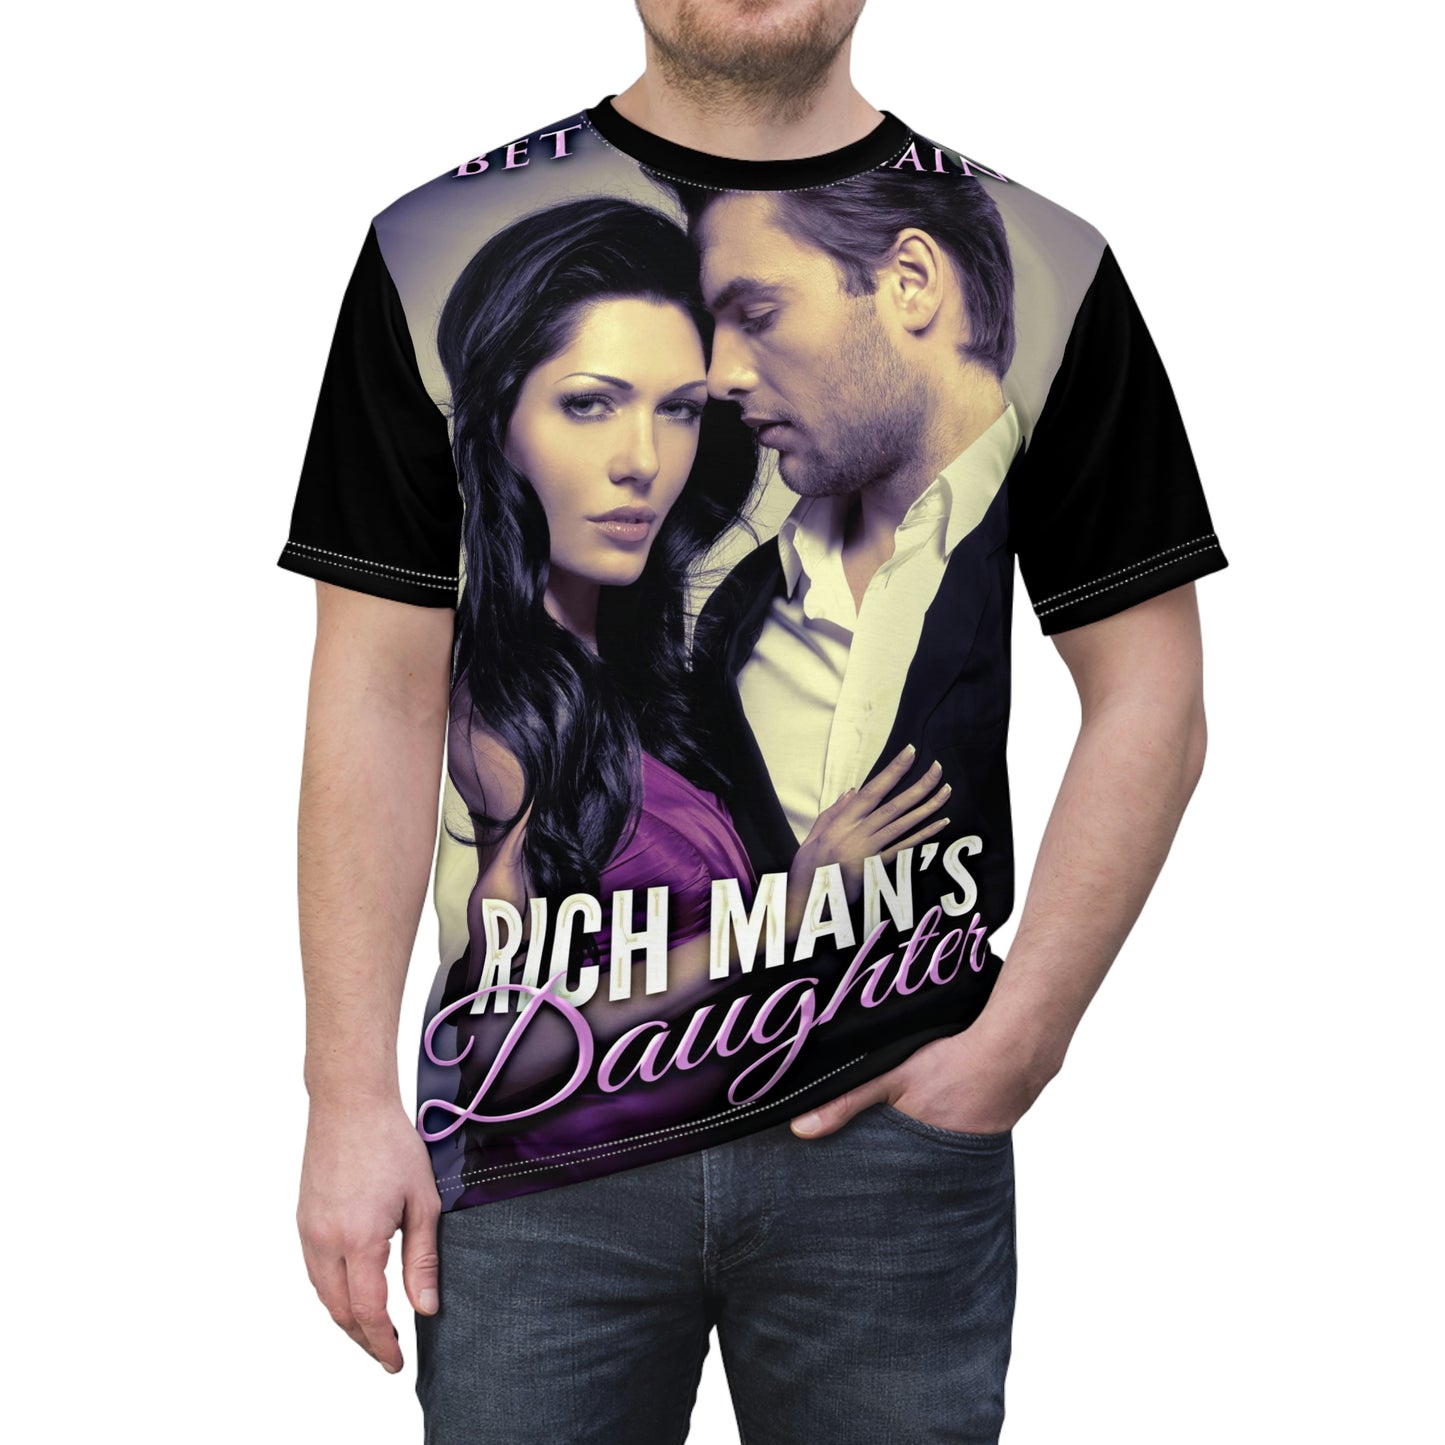 Rich Man's Daughter - Unisex All-Over Print Cut & Sew T-Shirt